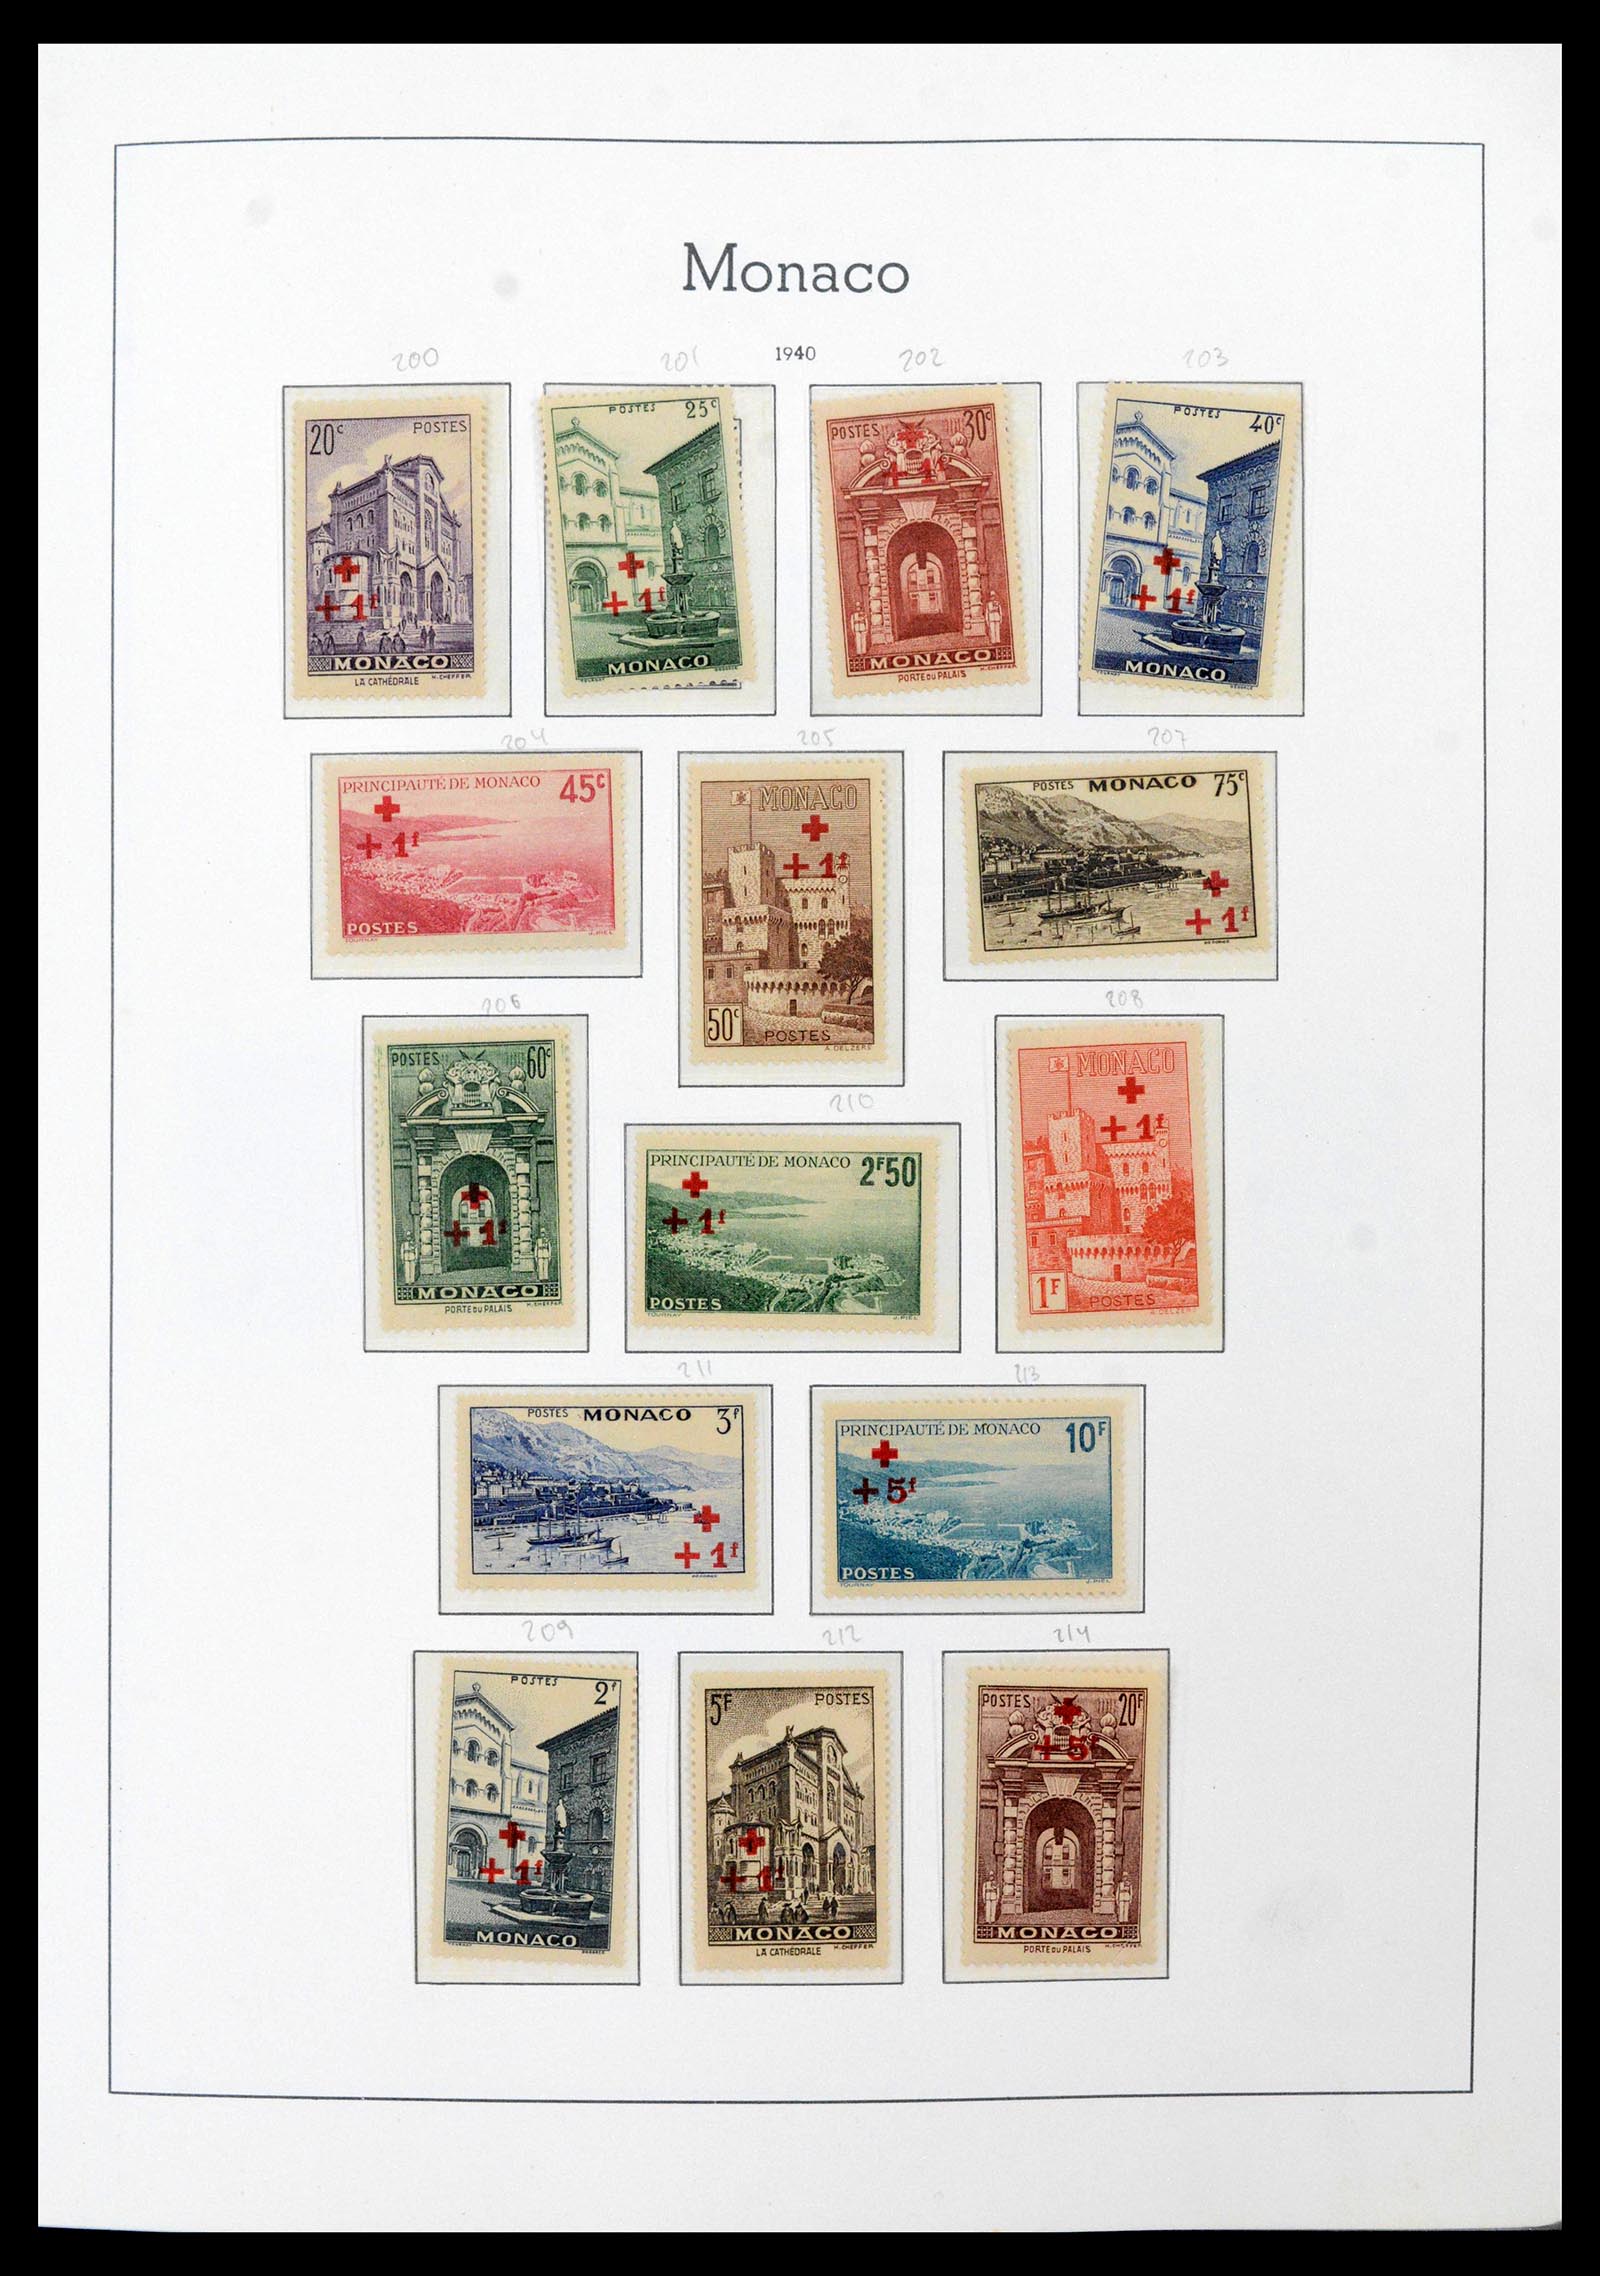 39250 0018 - Stamp collection 39250 Monaco 1885-1995.